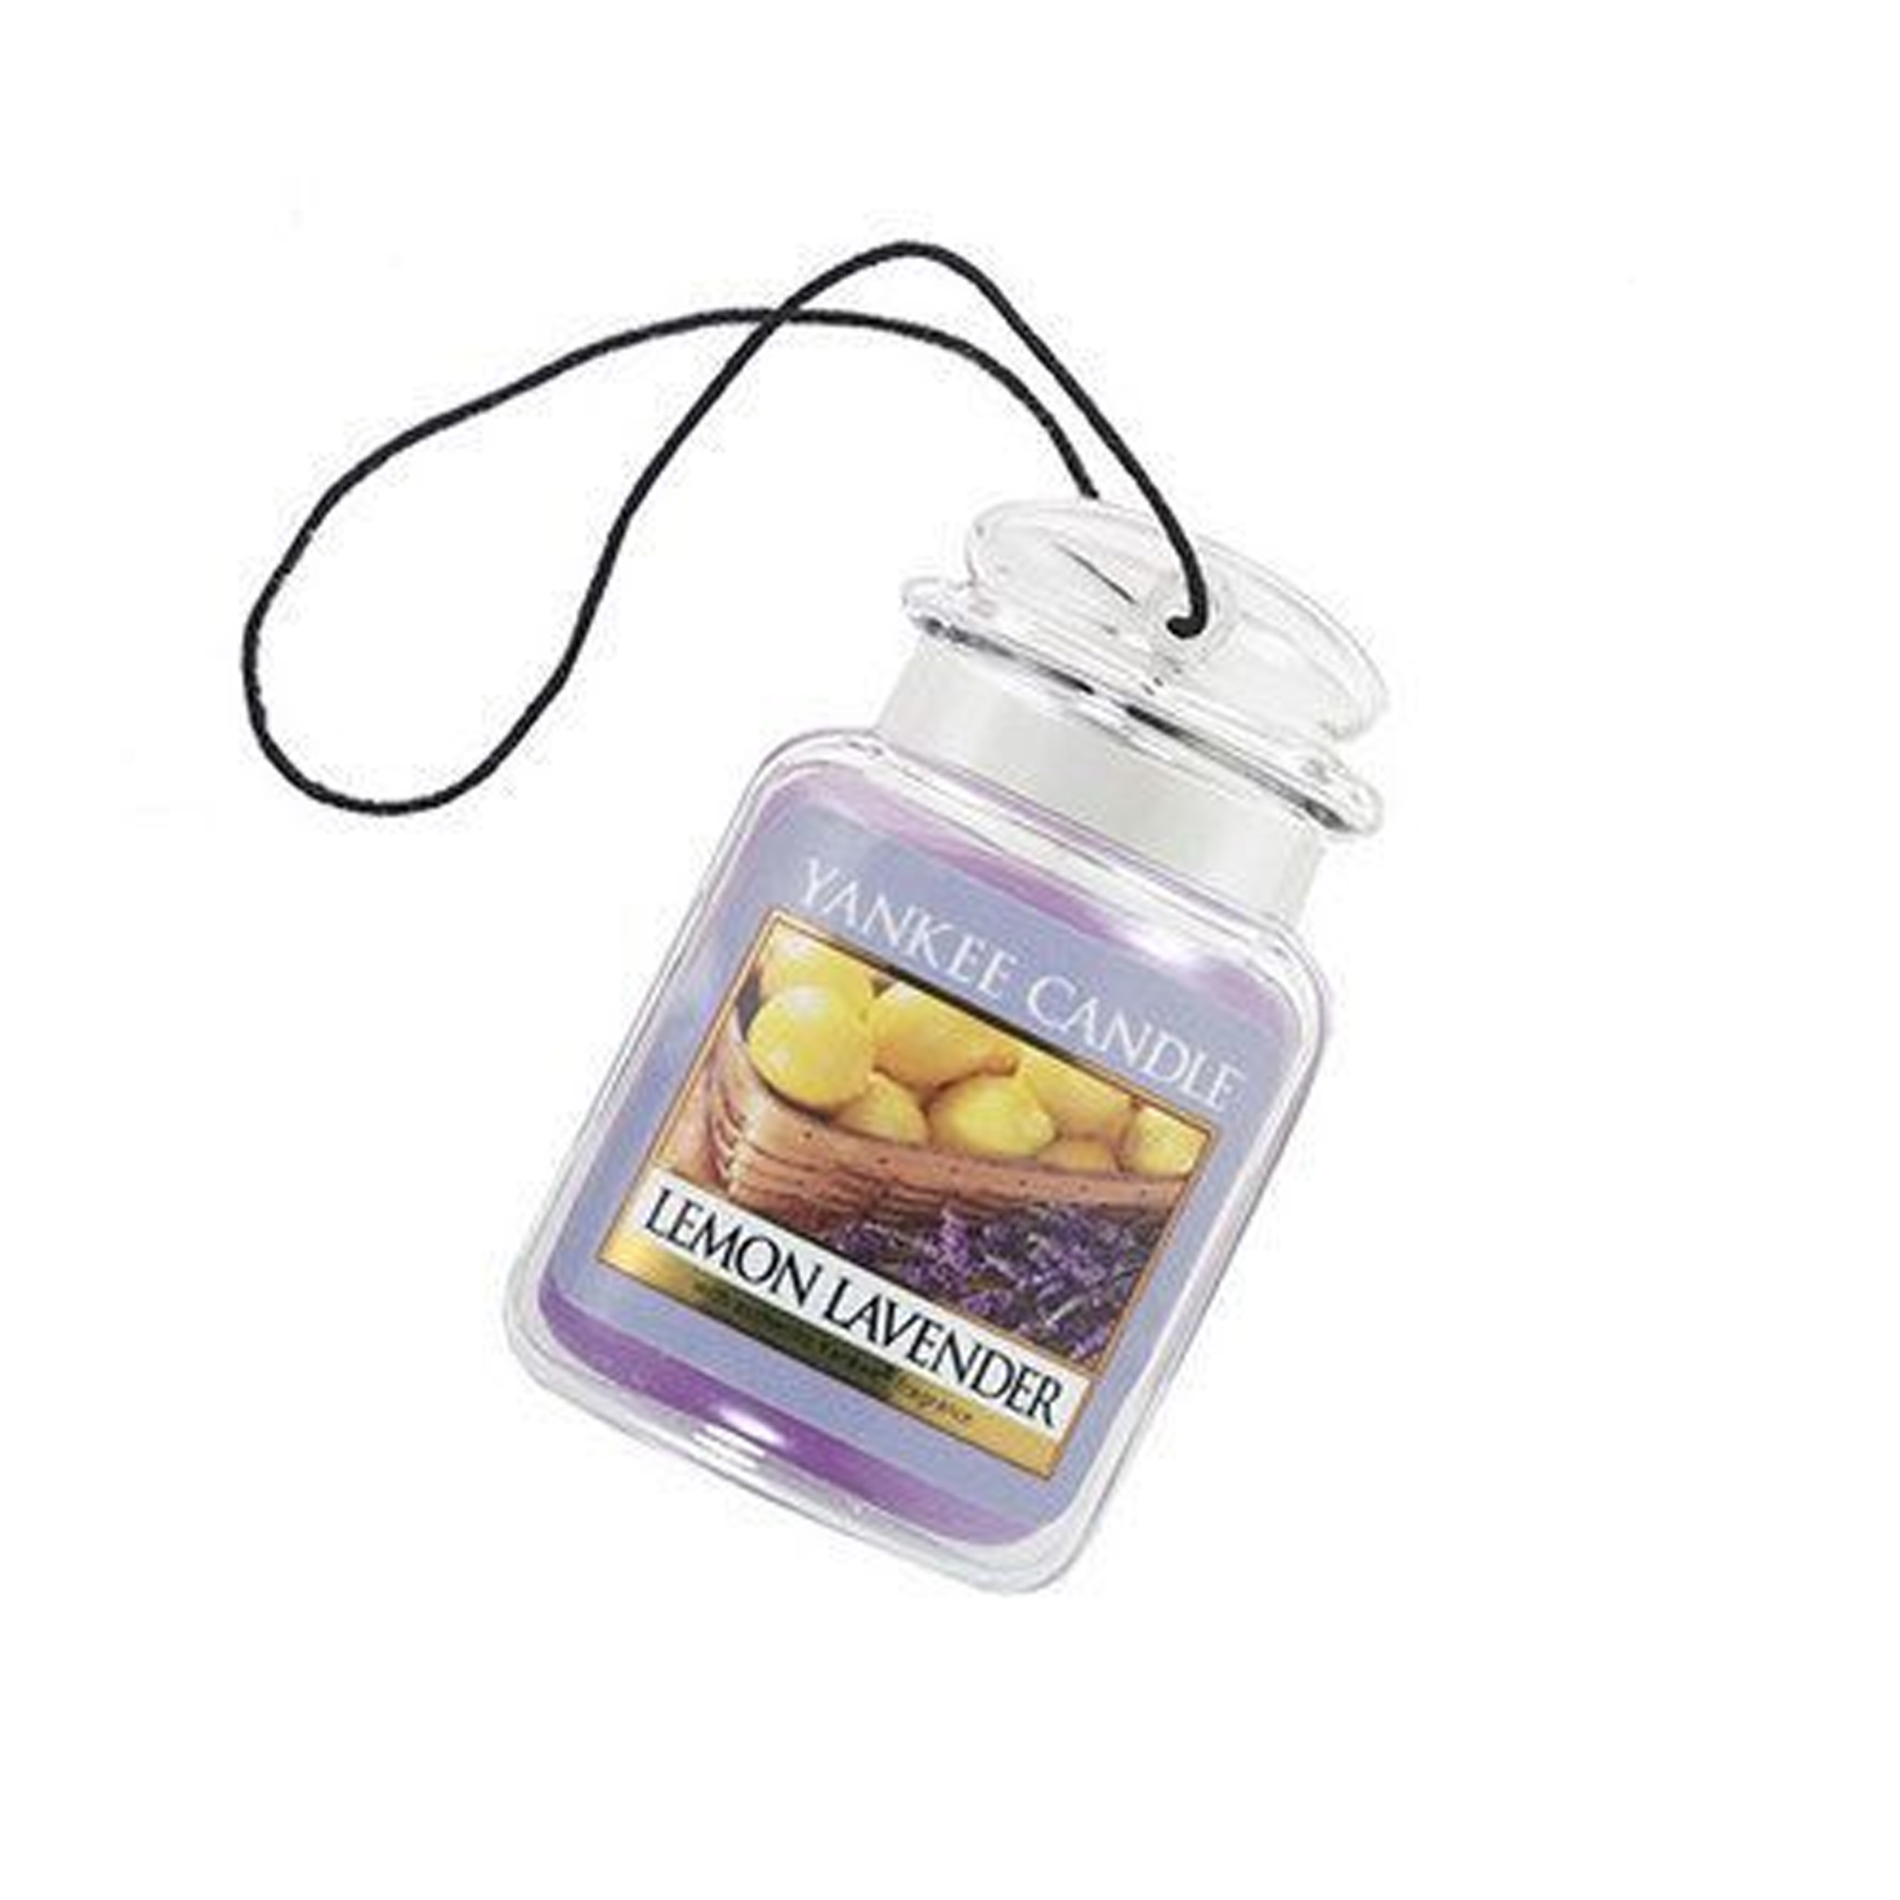 sap-thom-xe-huong-chanh-hoa-oai-huong-yankee-car-jar-ultimated-lemon-lavender-4